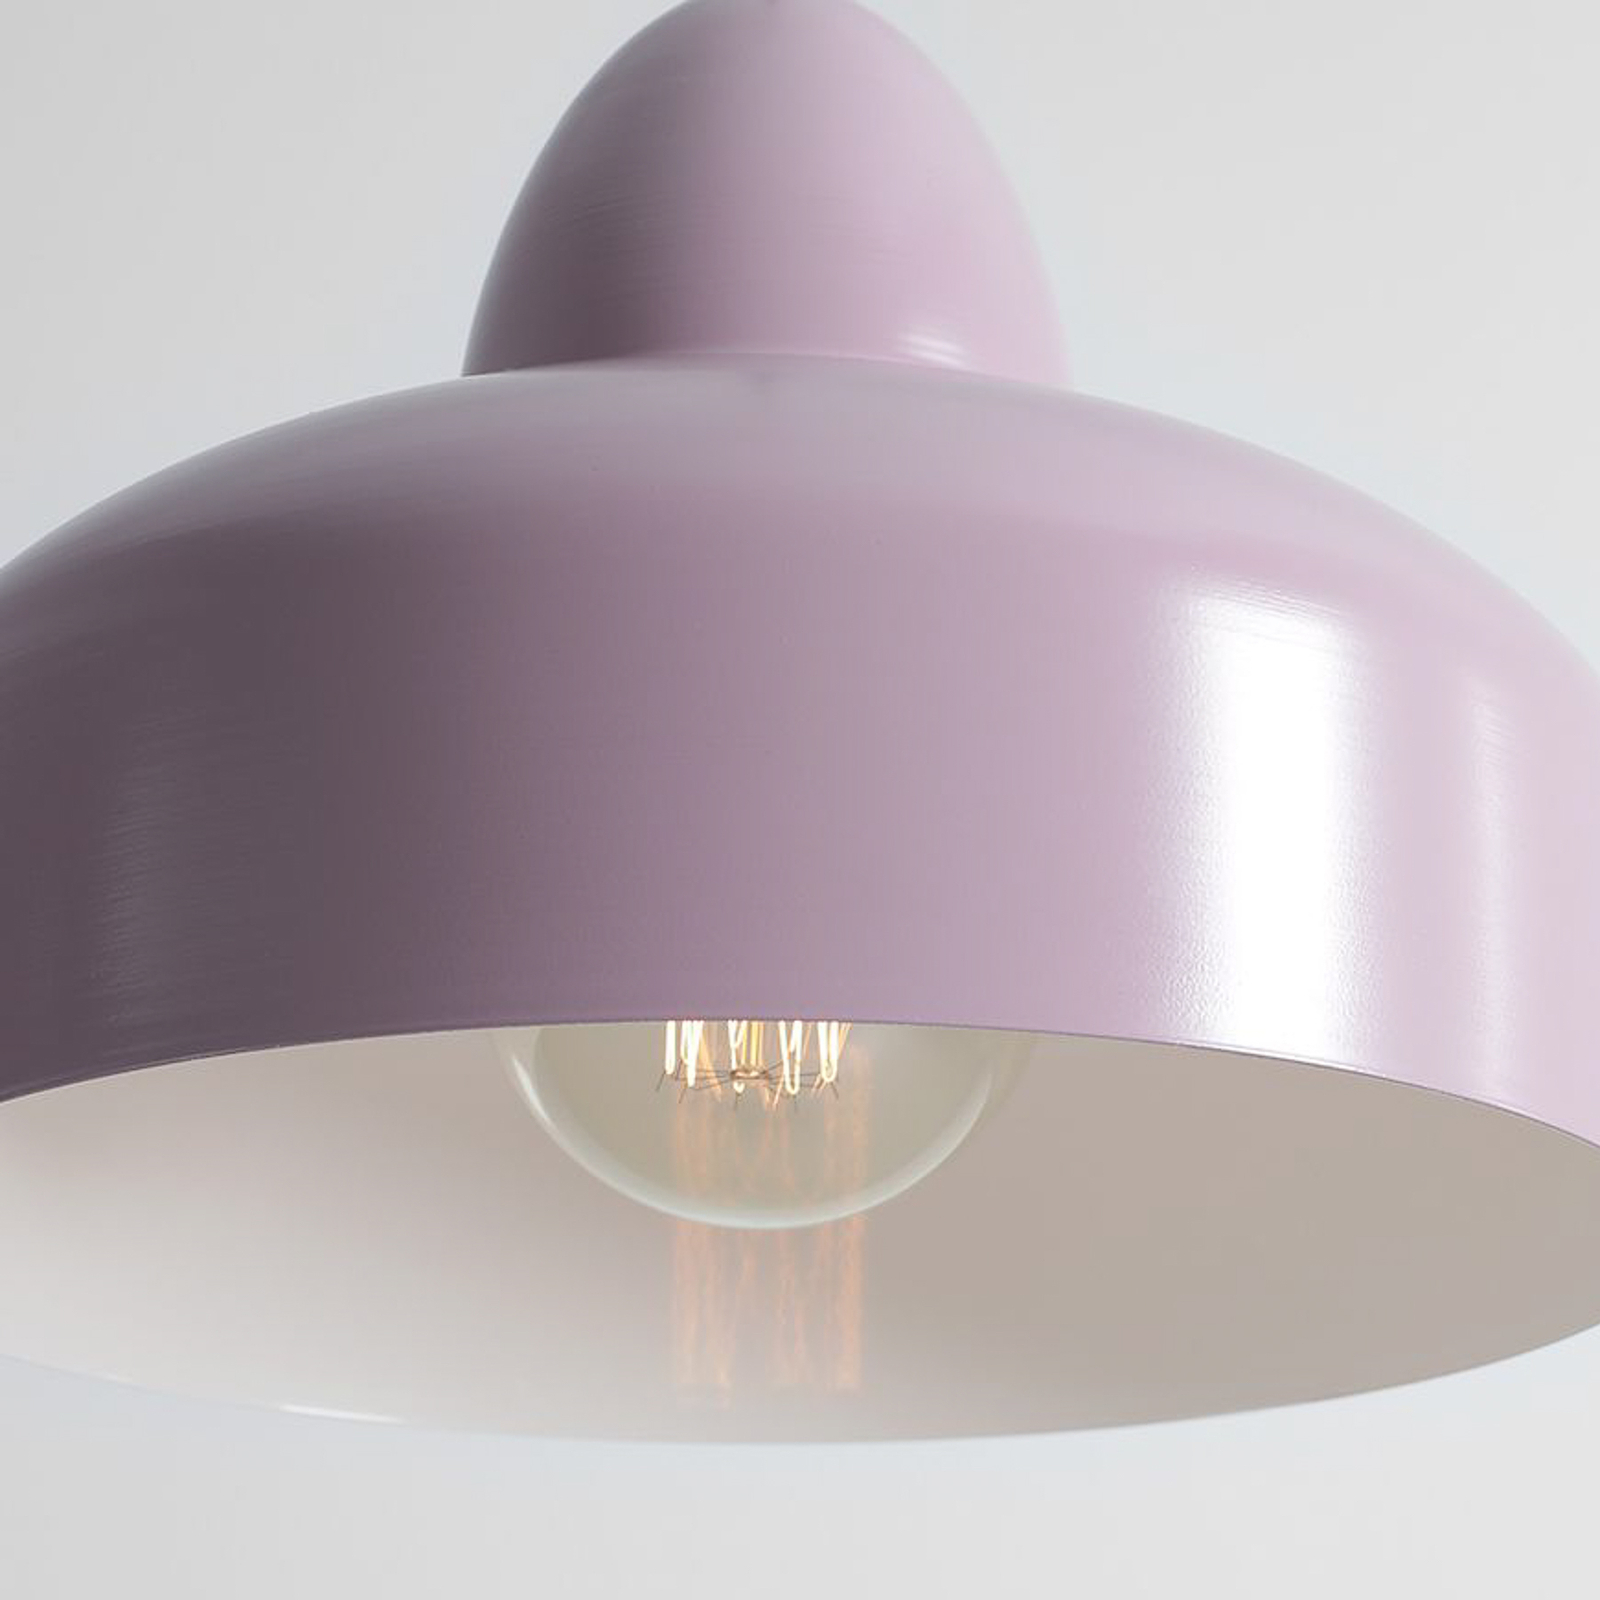 Hanglamp Mille, 1-lamp, lila